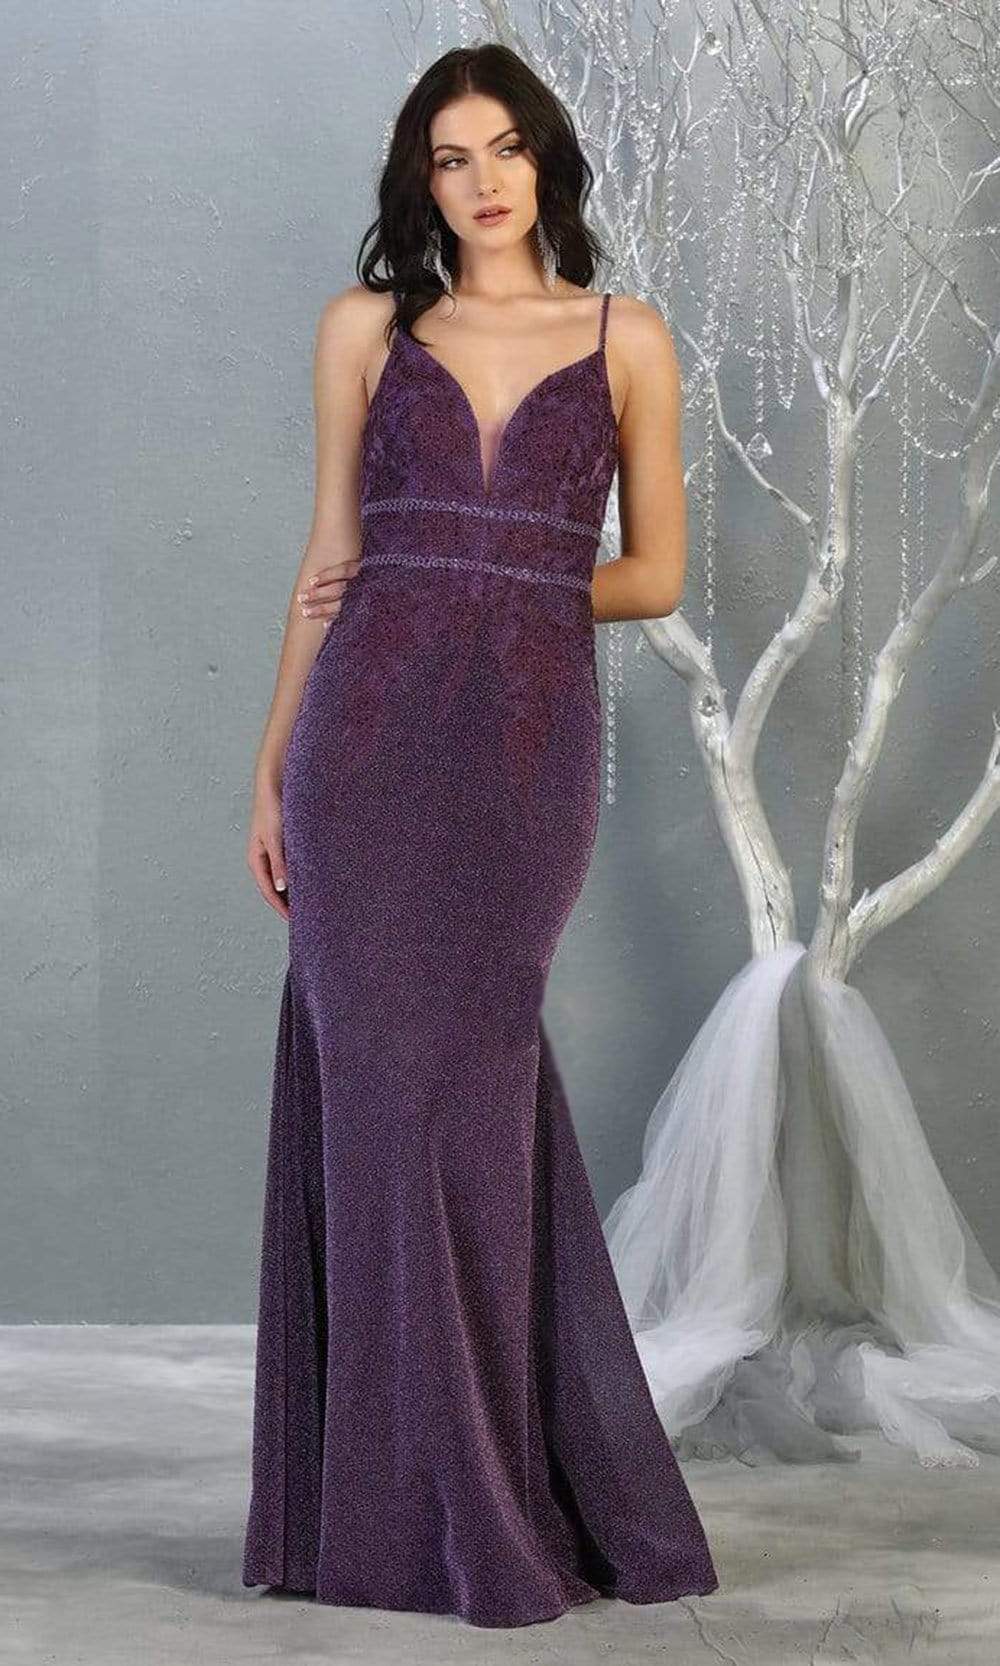 May Queen - MQ1796 Lace Applique-Ornate Trumpet Dress Evening Dresses 4 / Eggplant